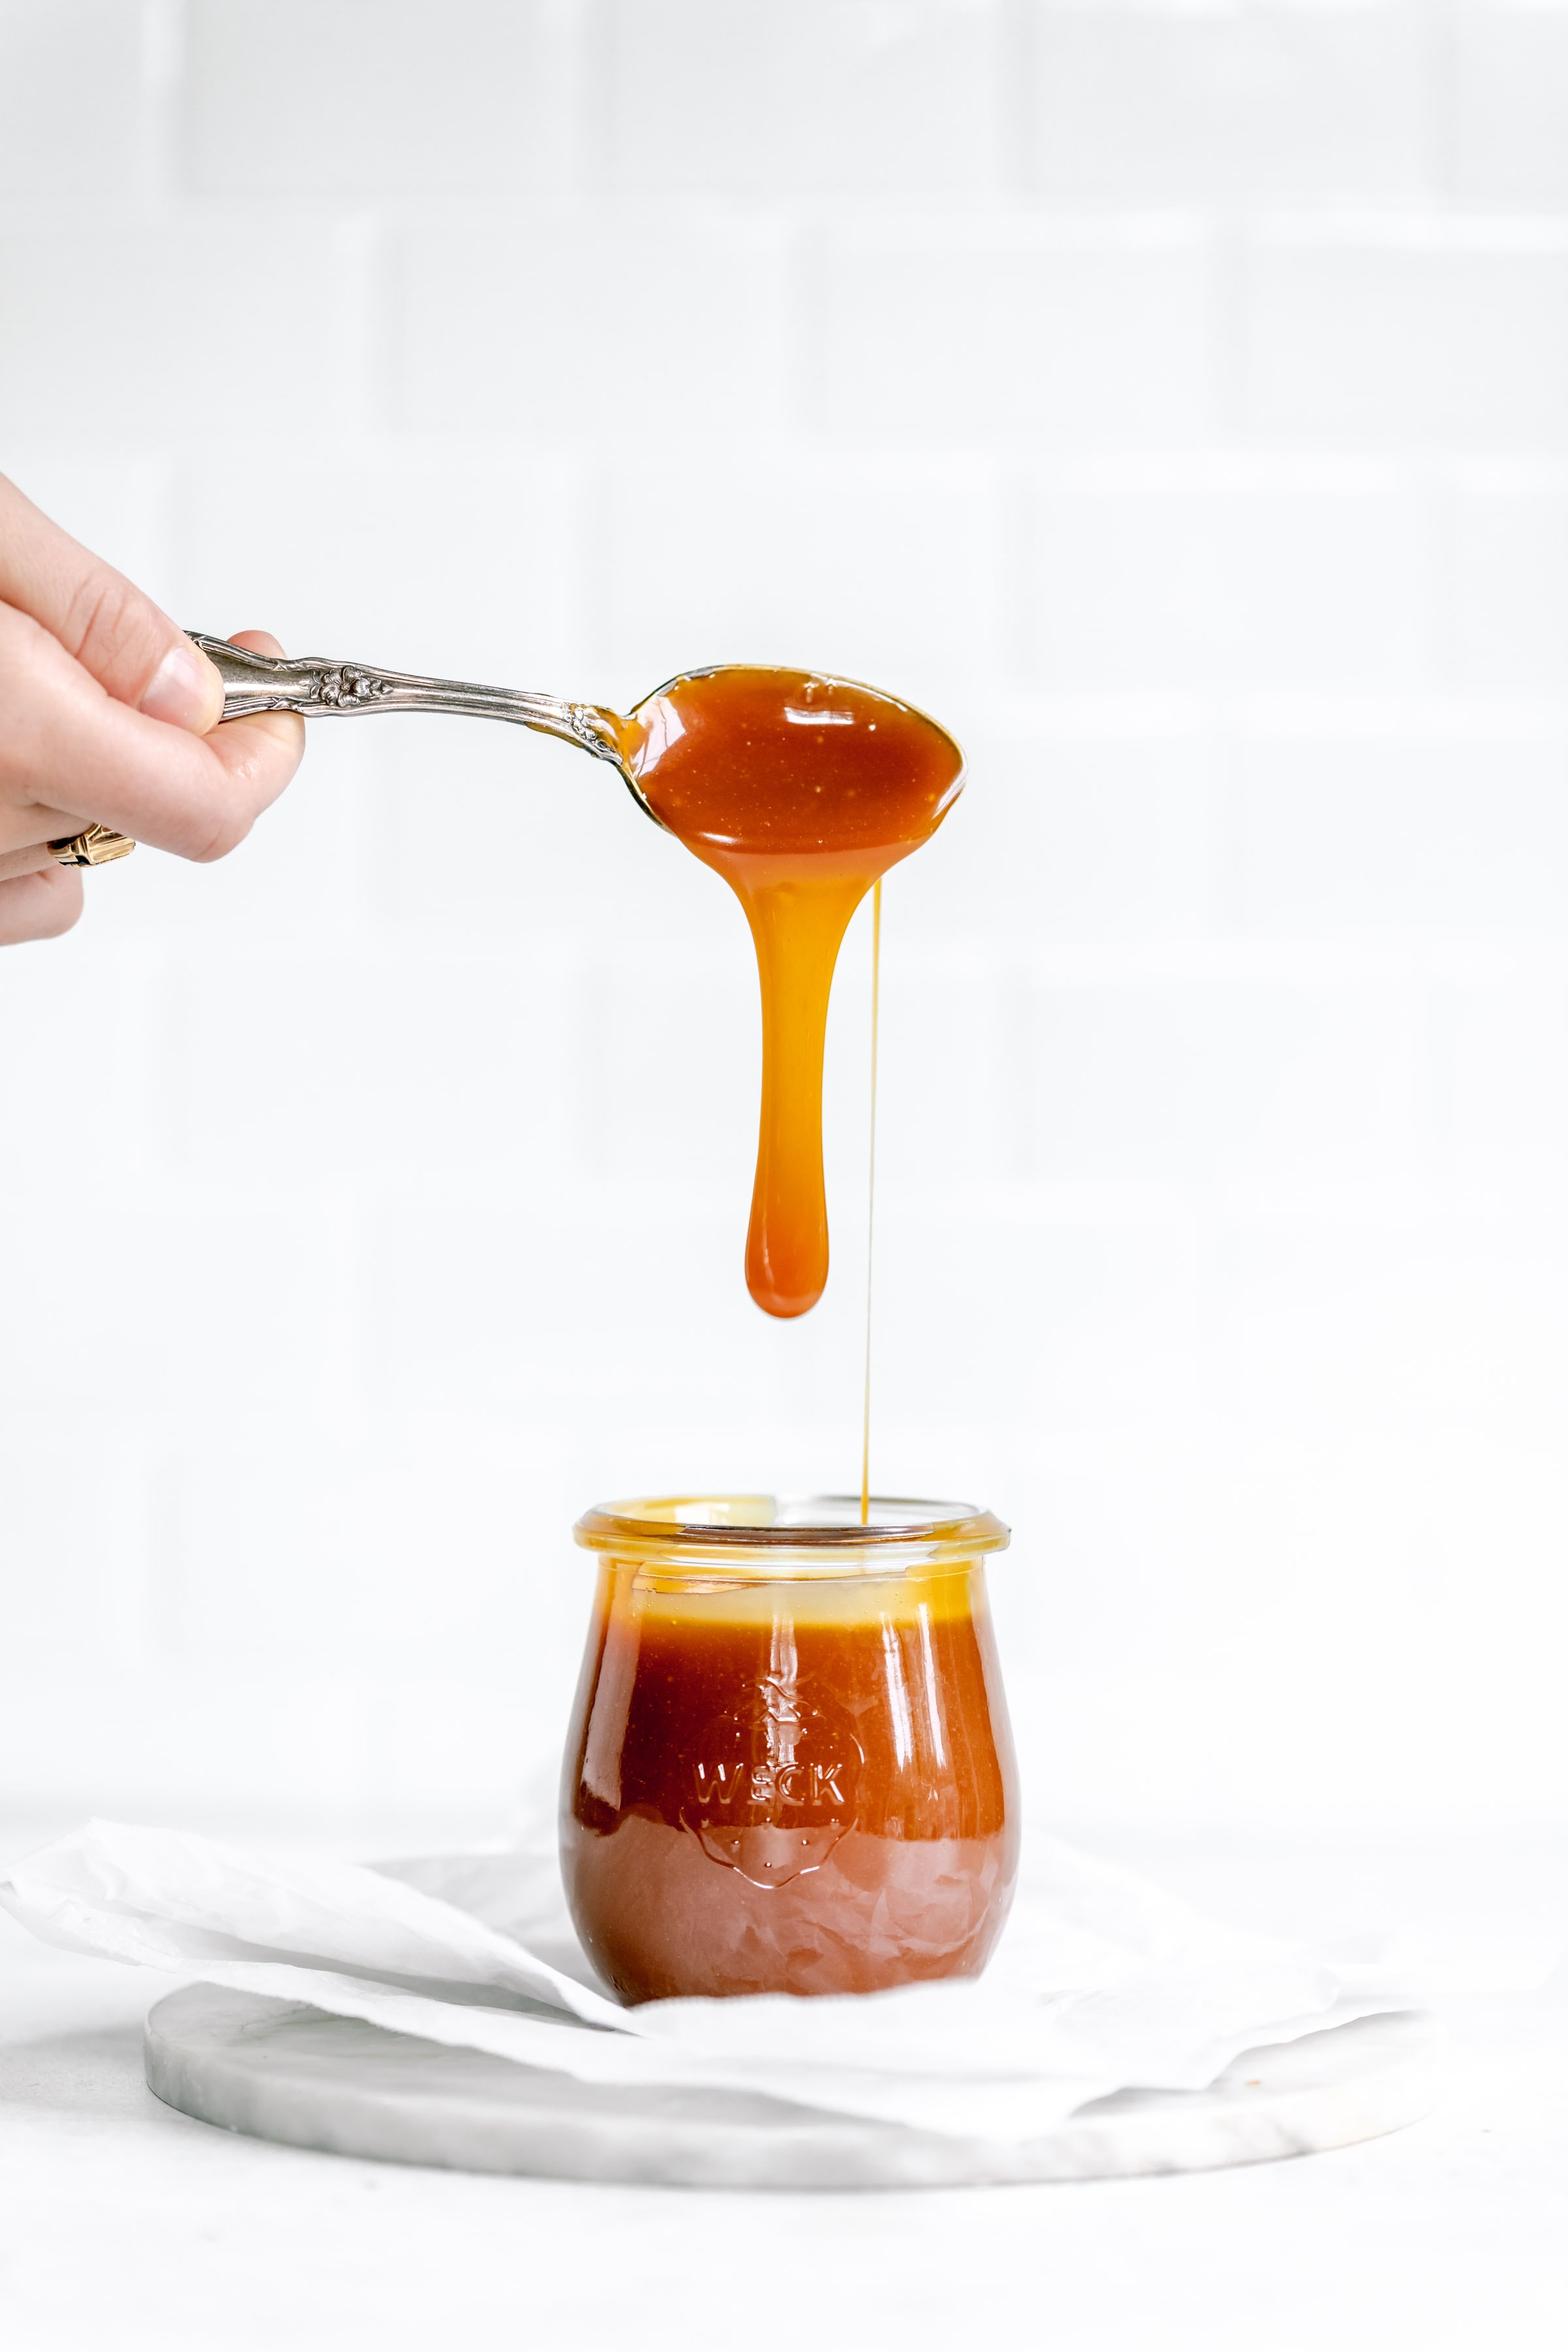 easy homemade caramel in a glass jar